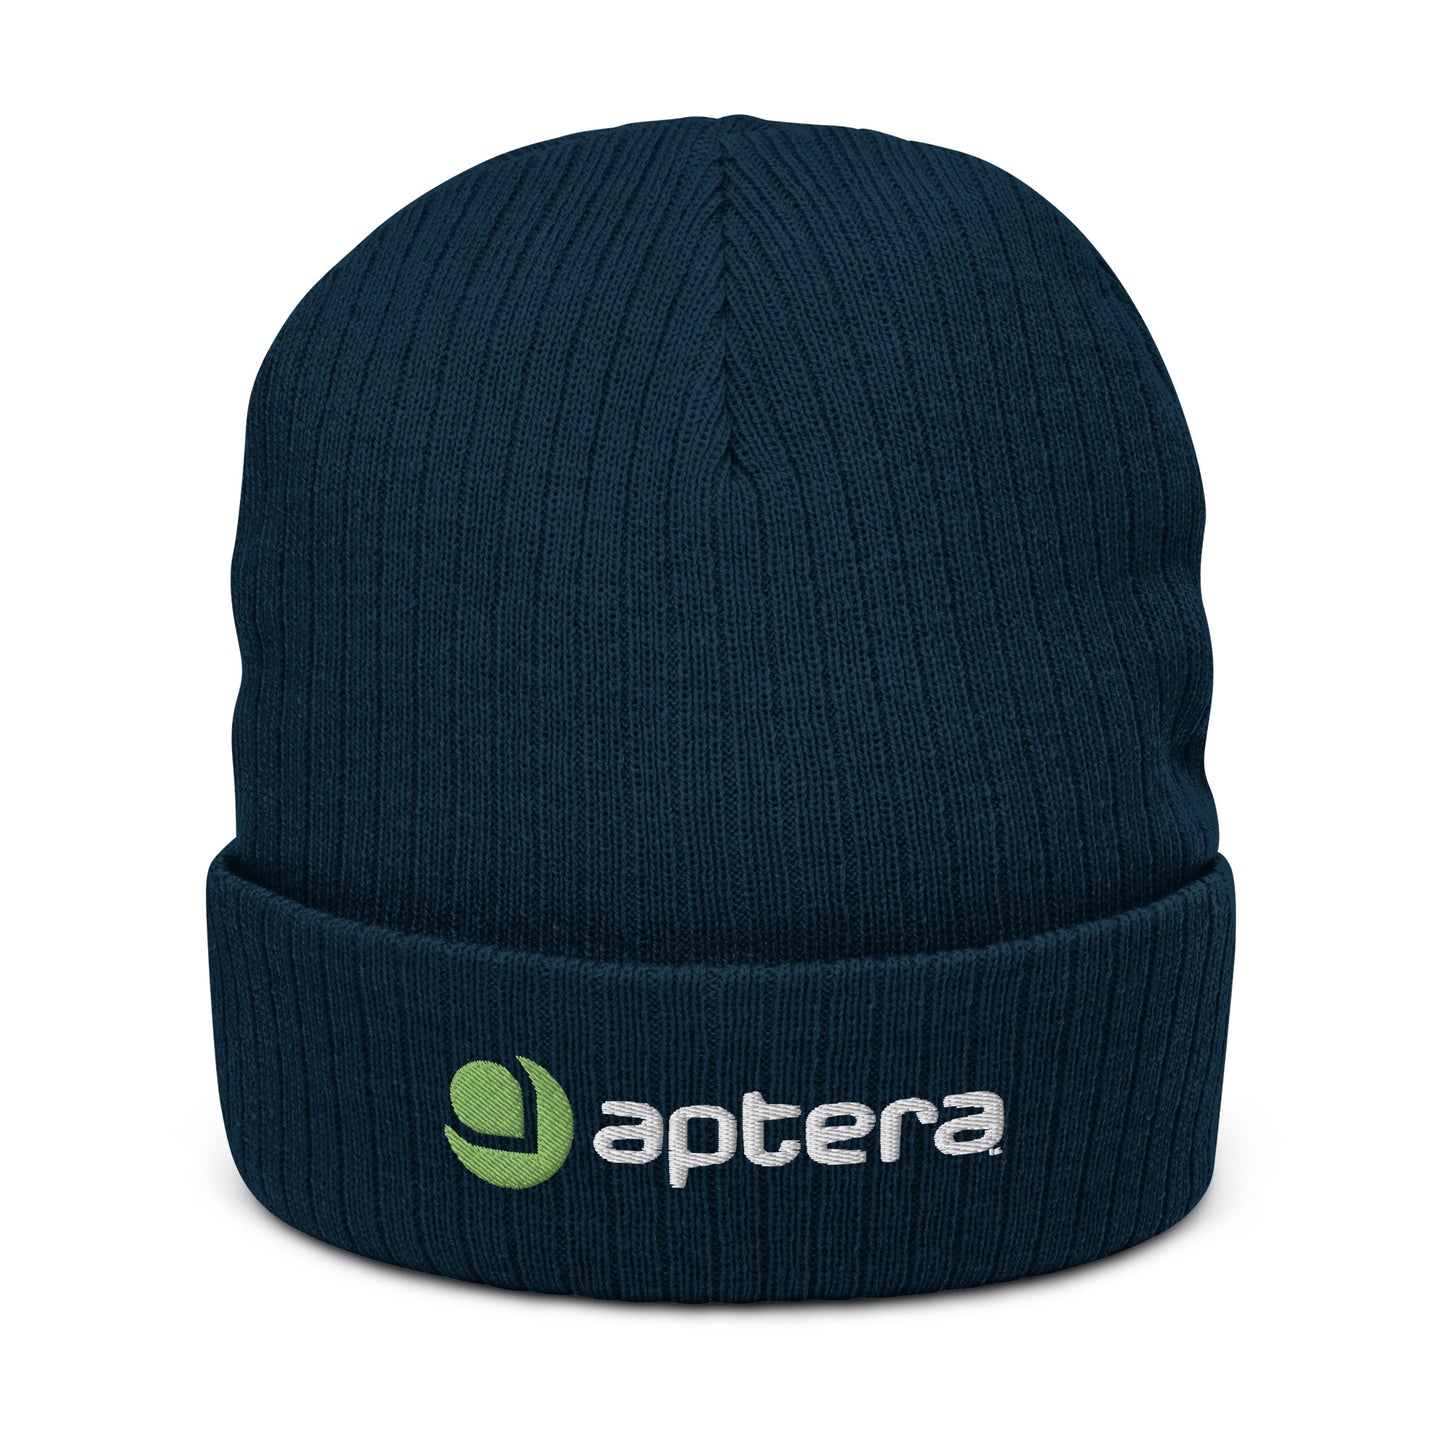 Aptera Logo 100% Organic Cotton Beanie